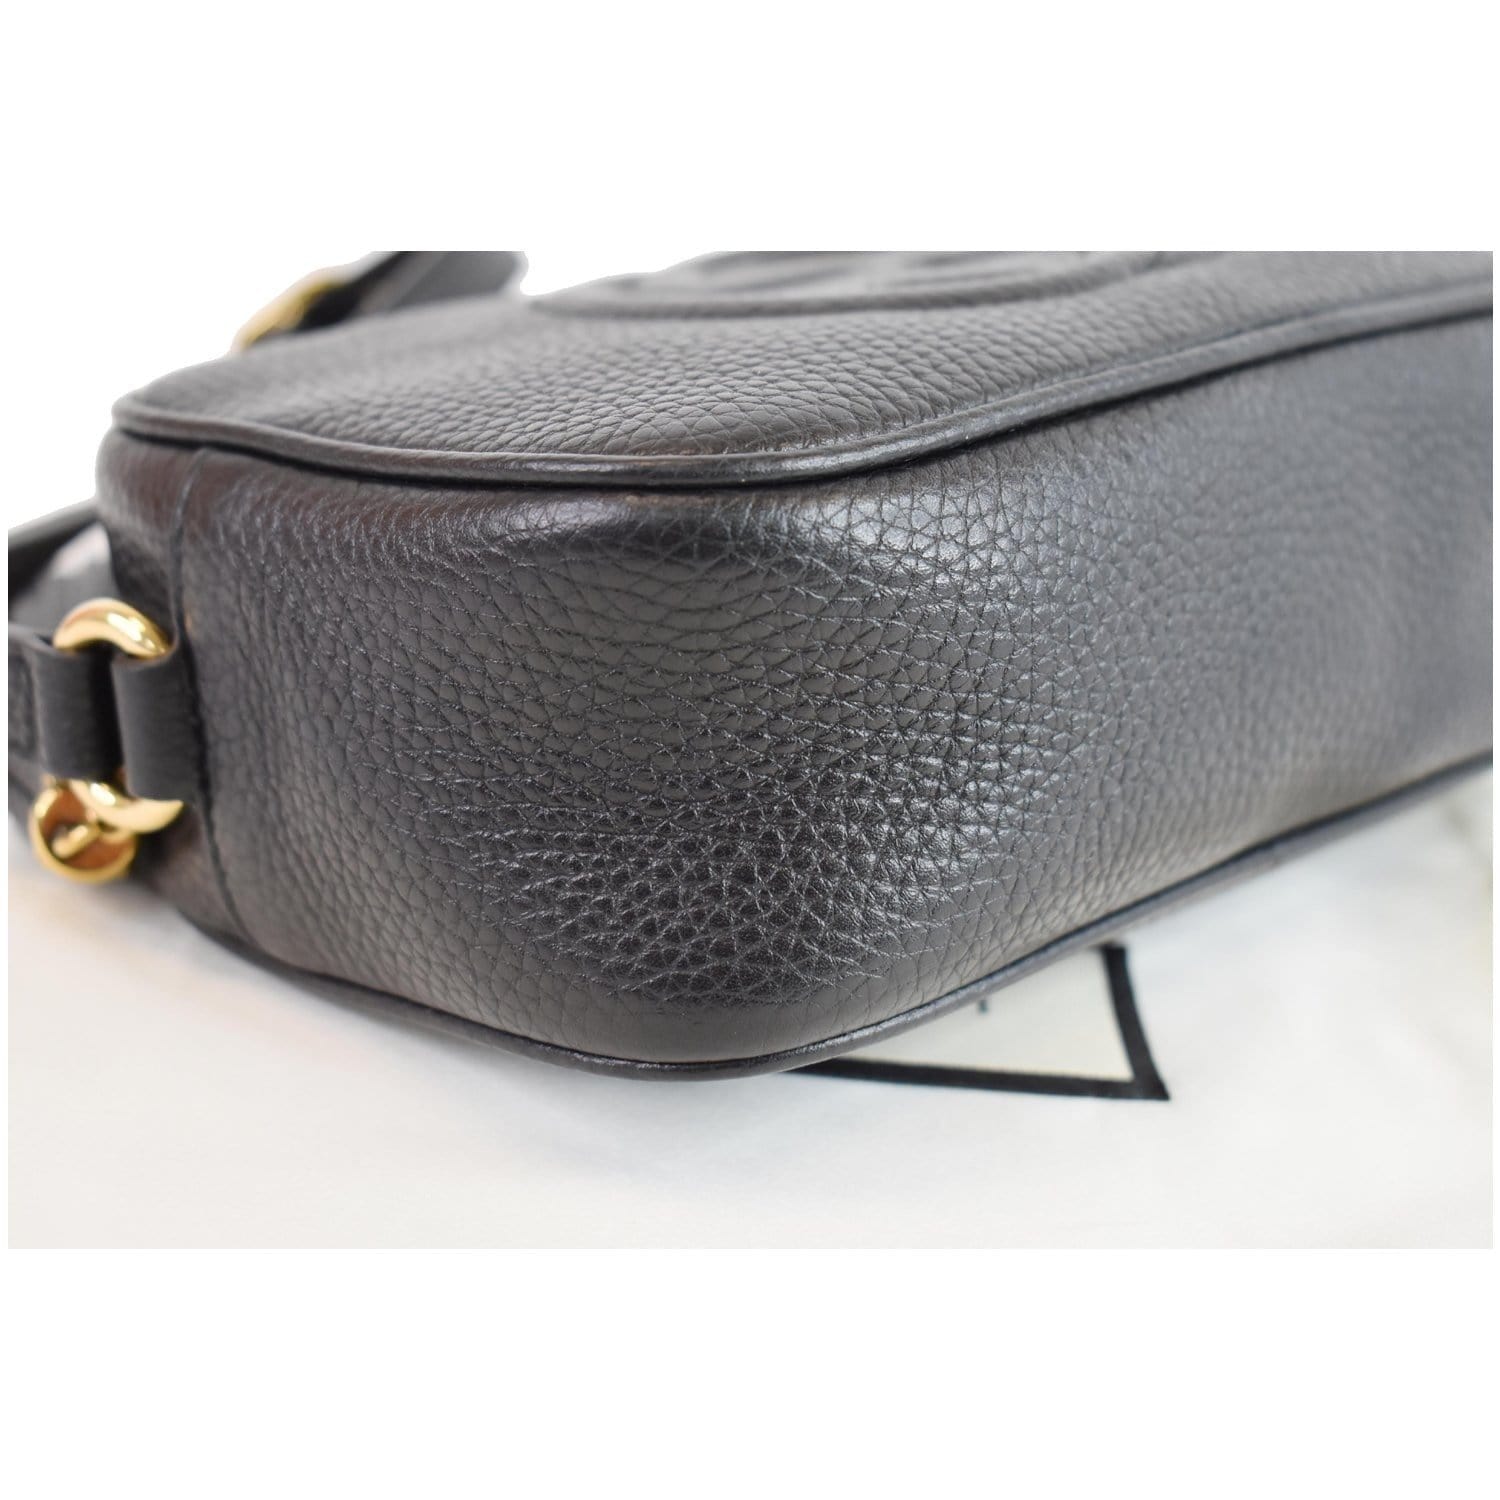 GUCCI Soho Disco Small Leather Crossbody Bag Black 347994